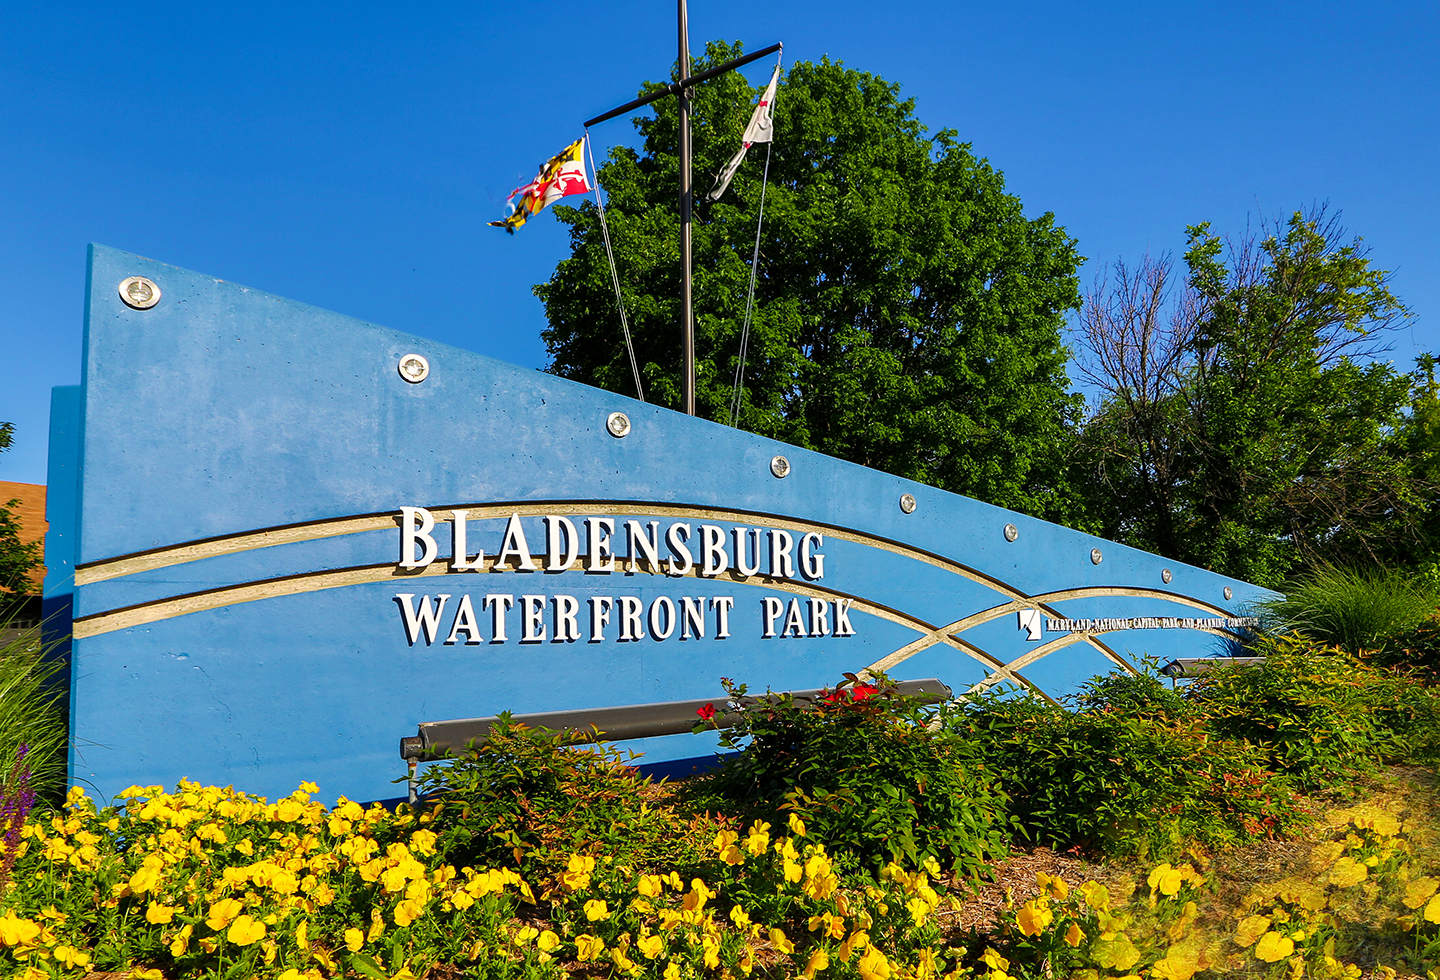 Bladensburg Waterfront Park sign